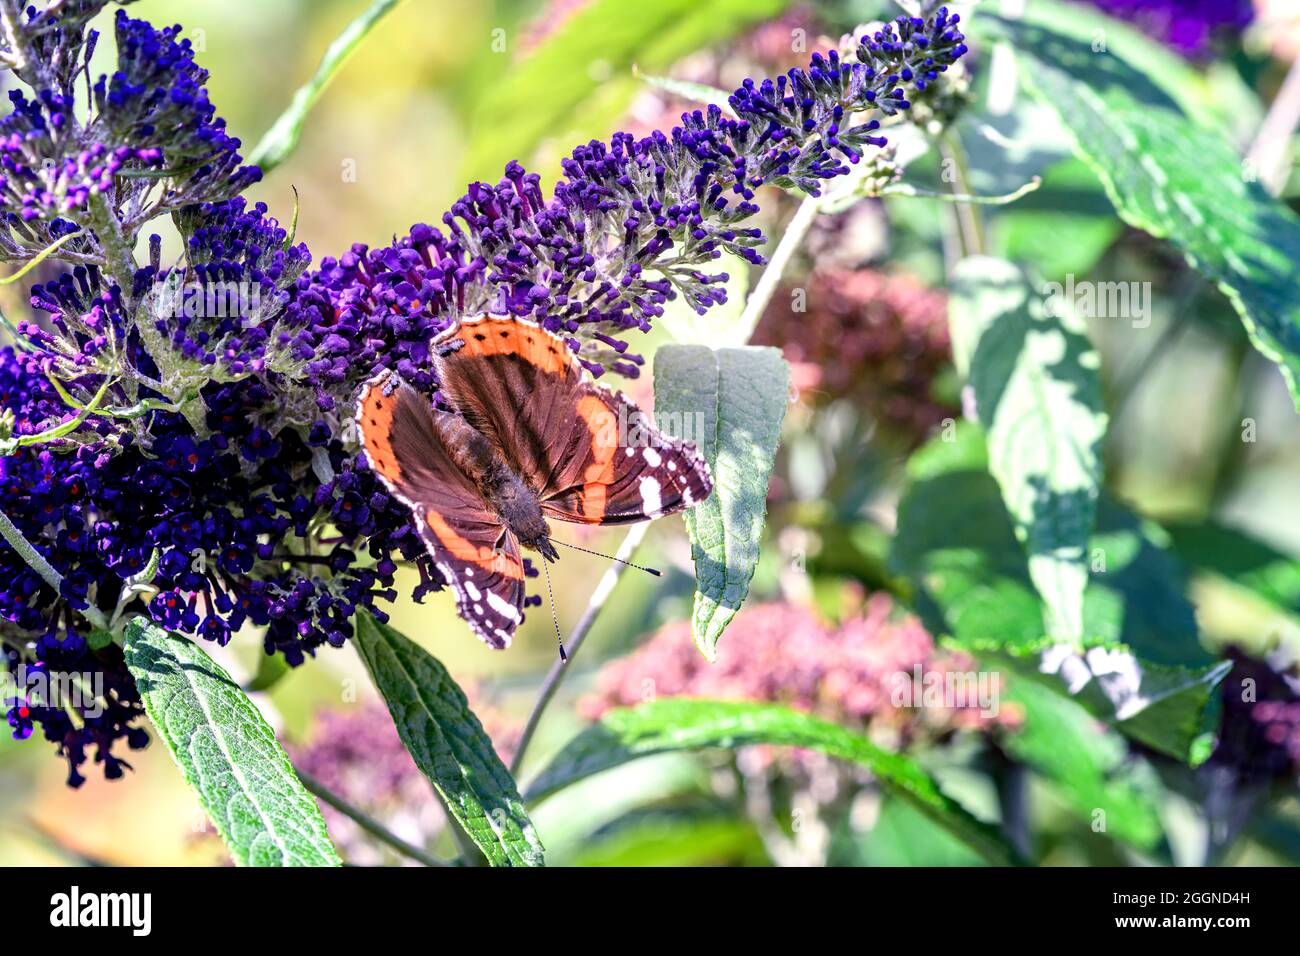 close up closeup of red admiral butterfly butterflies Vanessa atalanta feeding on purple buddleja 'buzz' bush shrub Buddleja davidii Stock Photo